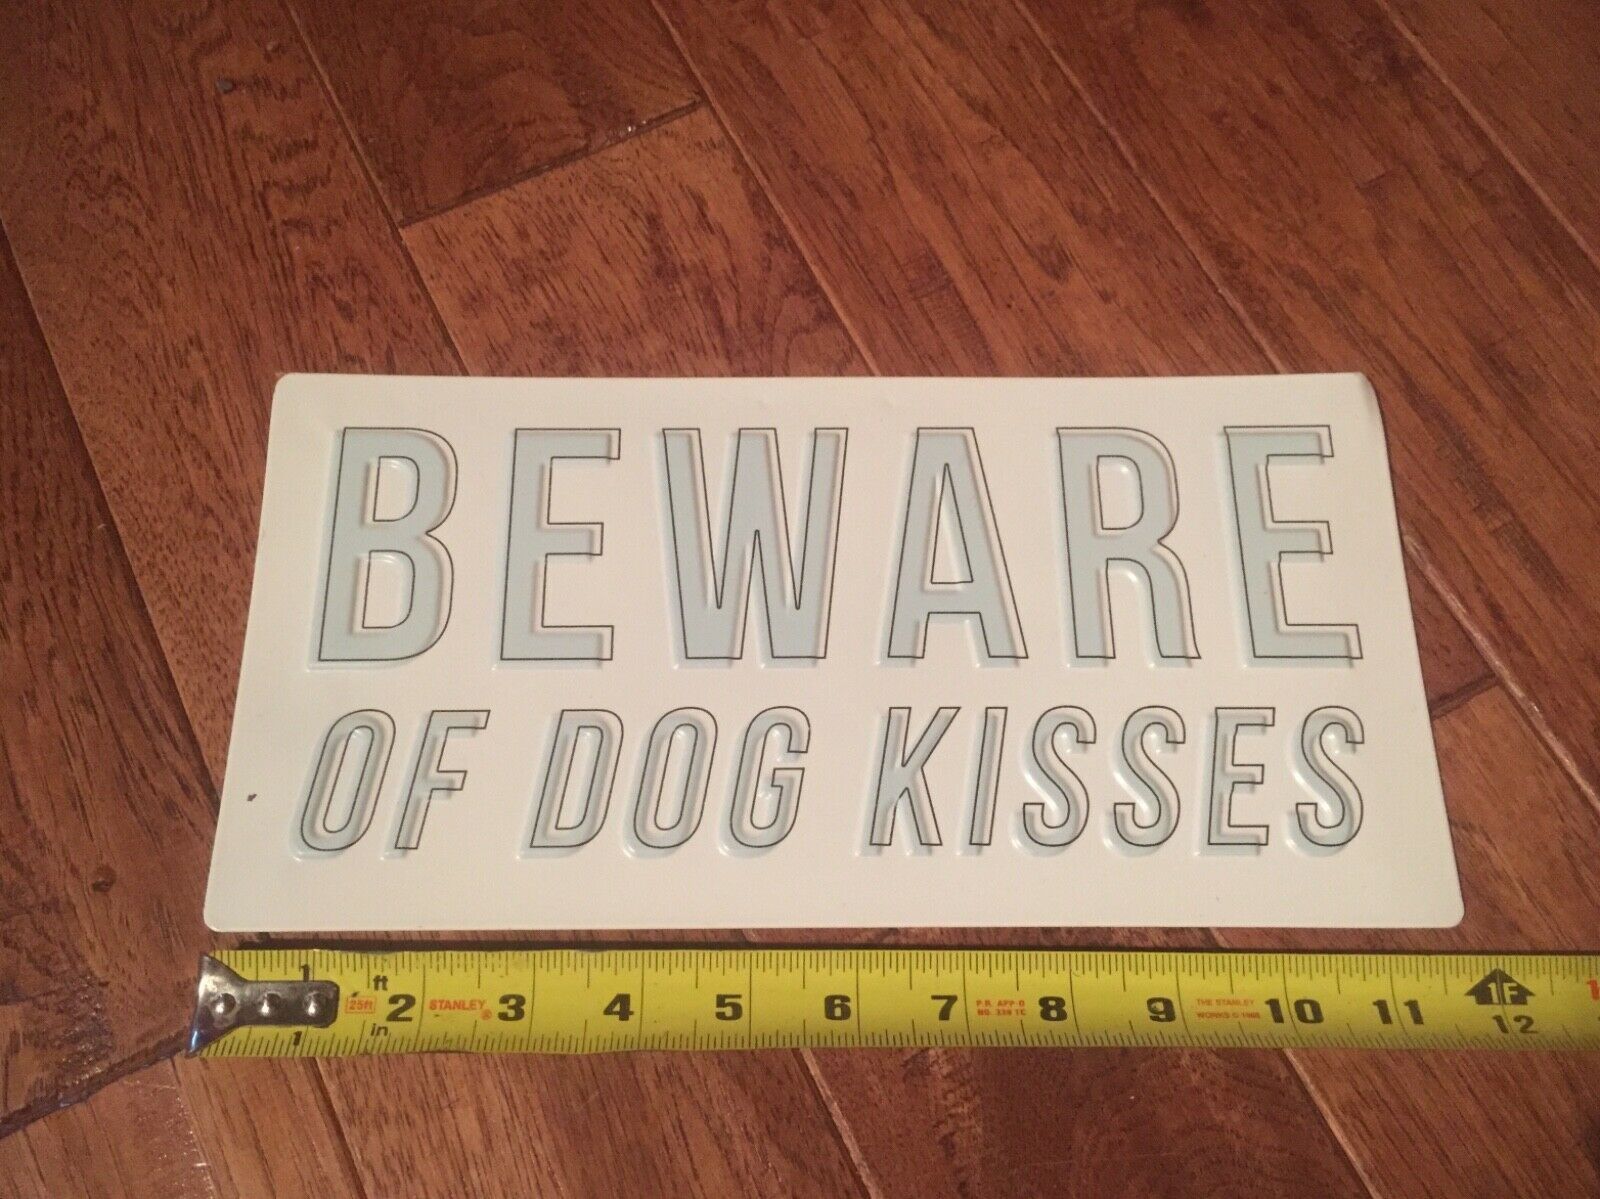 12 x 5.98  Inch Metal Sign  " Beware of Dog Kisses" - $10.00